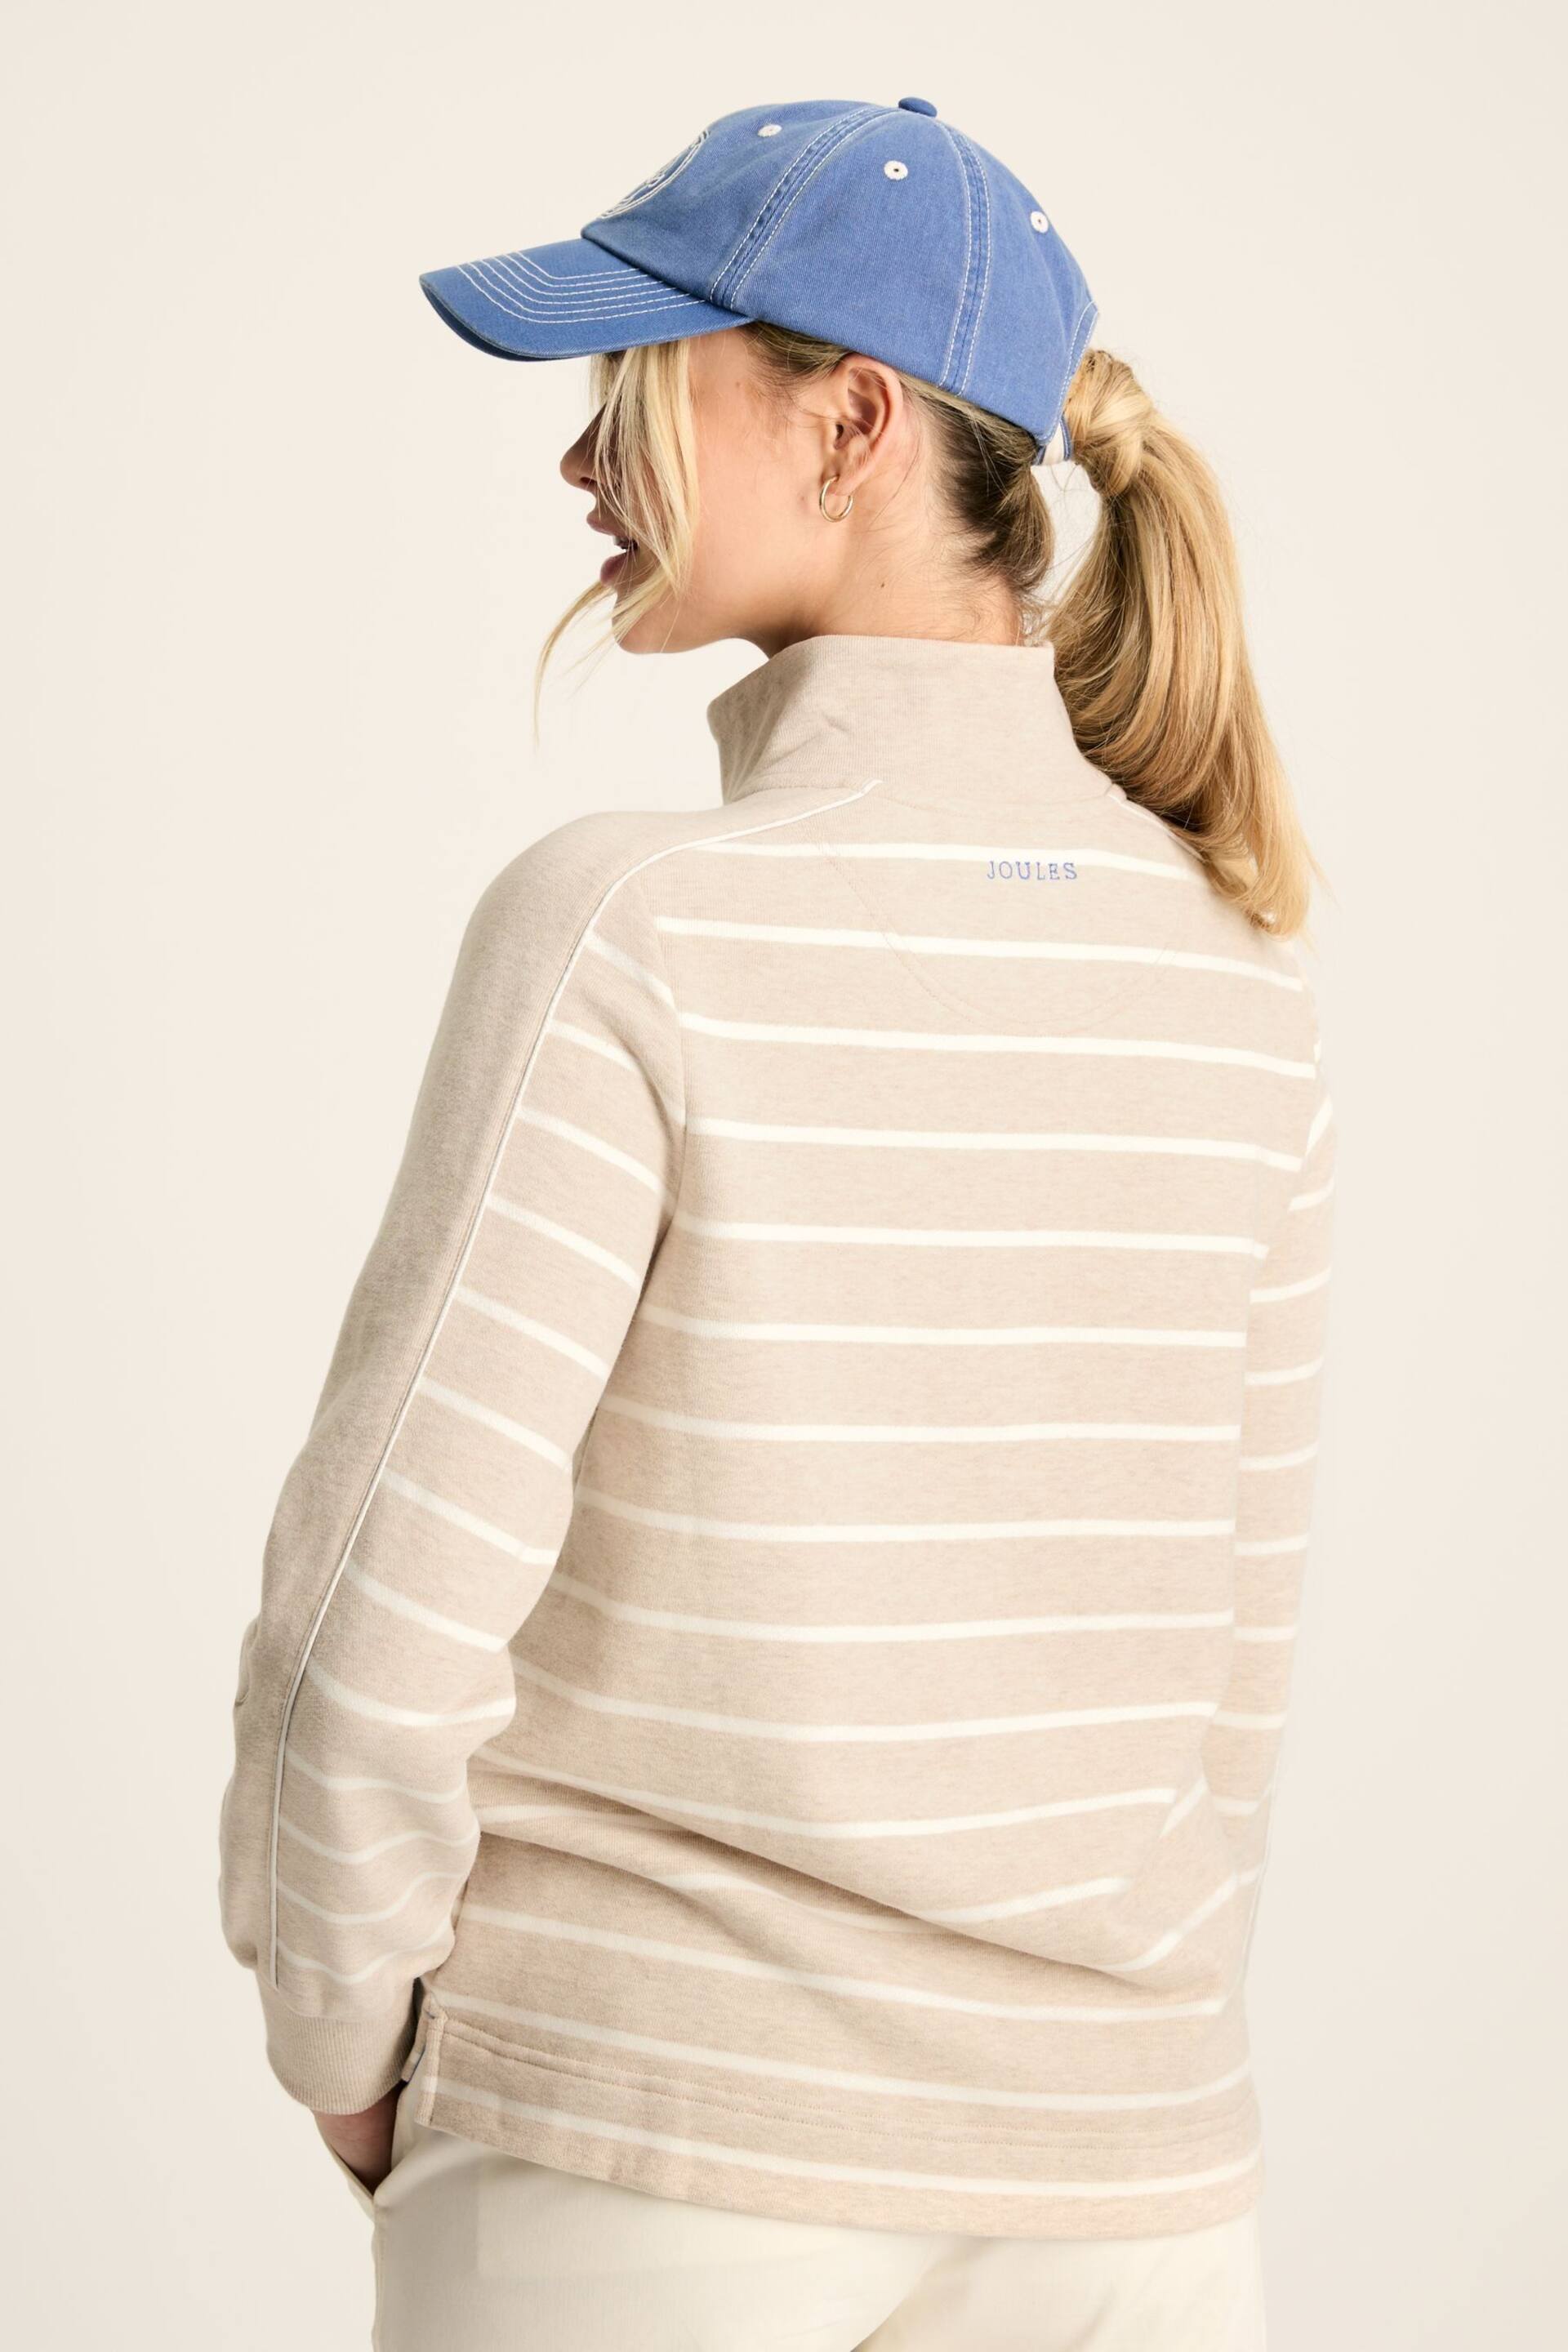 Joules Southwold Oatmarl Button Down Striped Sweatshirt - Image 2 of 8